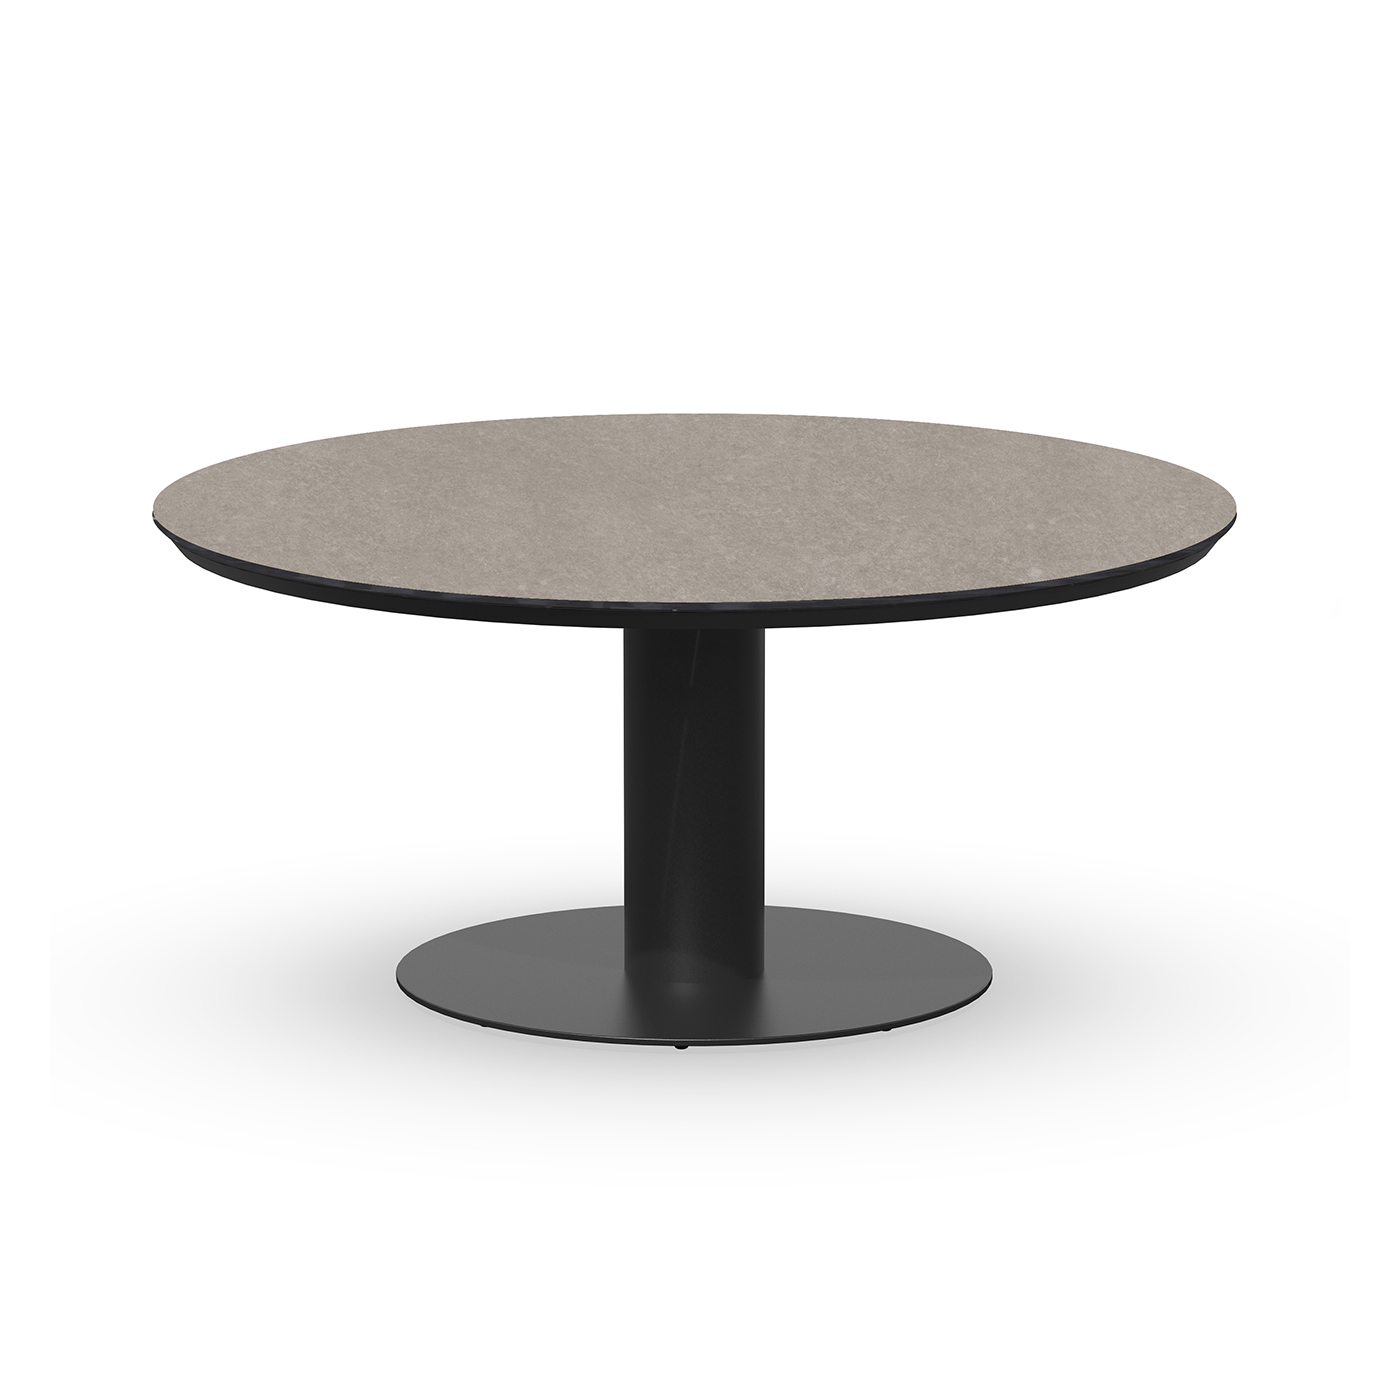 Moreno Low Dining Table Trespa Dark Basalt 150 cm Ø Charcoal